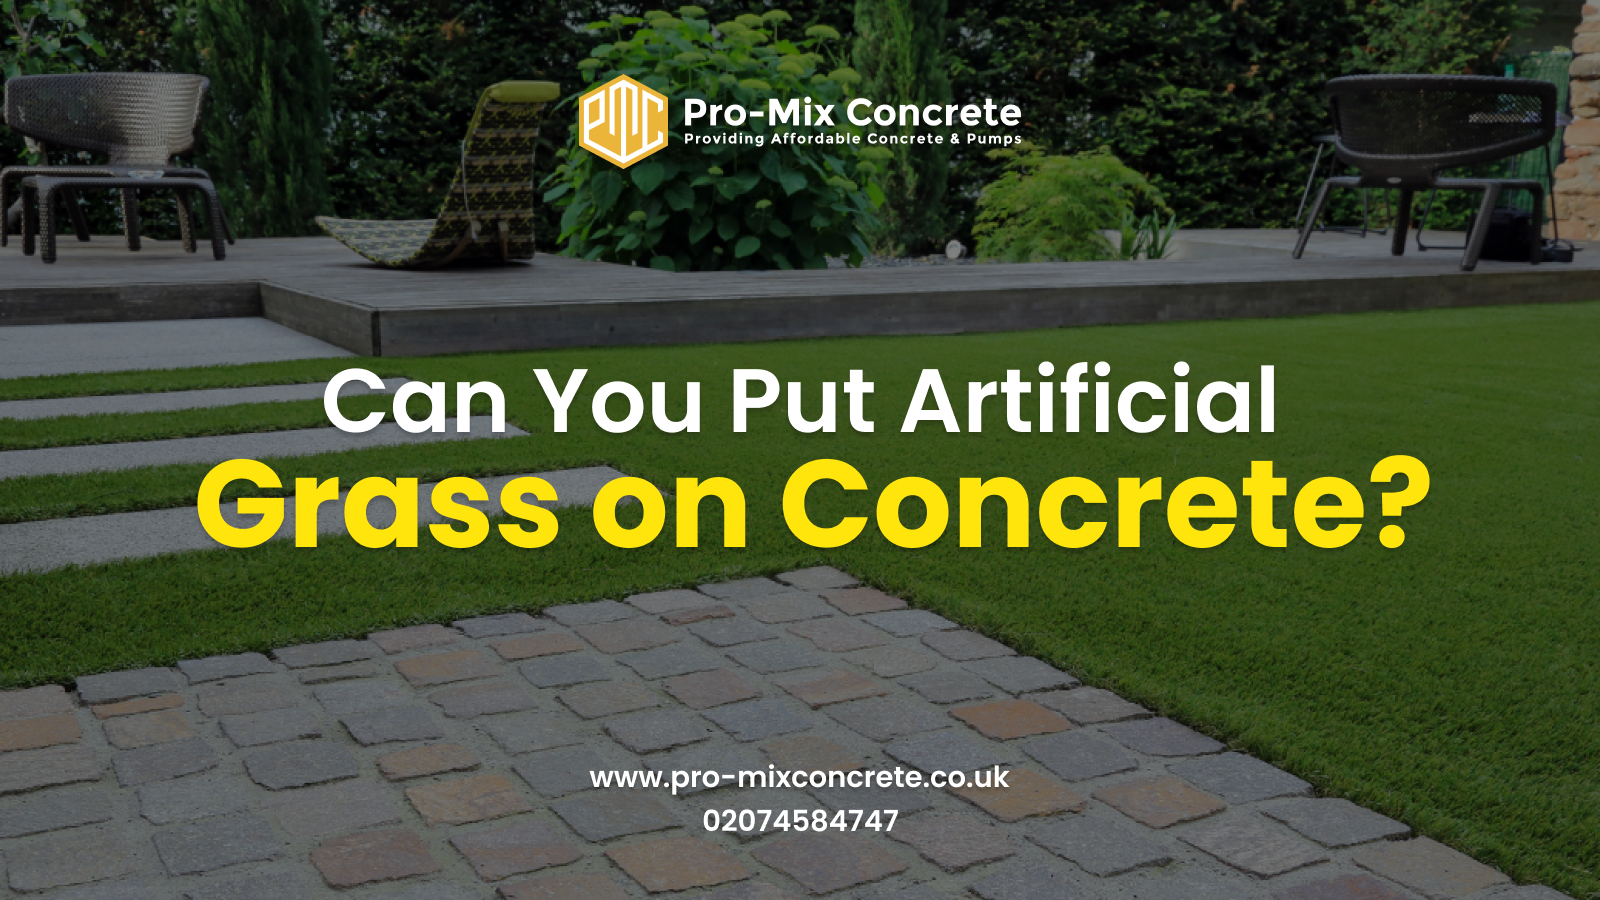 Artificial Grass on Concrete